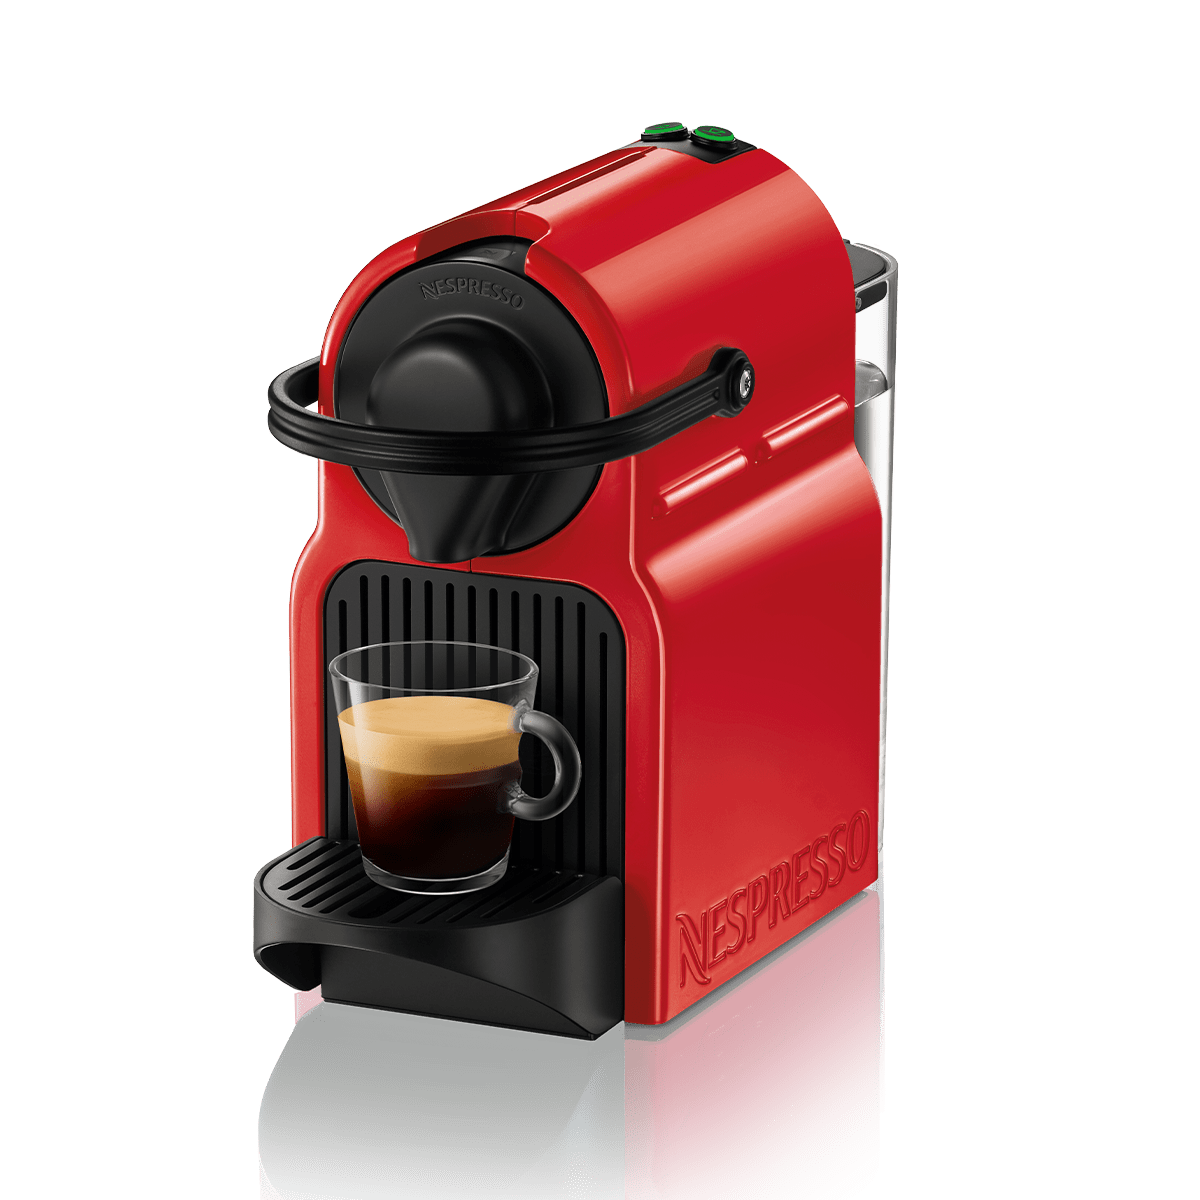 Espressor Nespresso Inissia Red 2